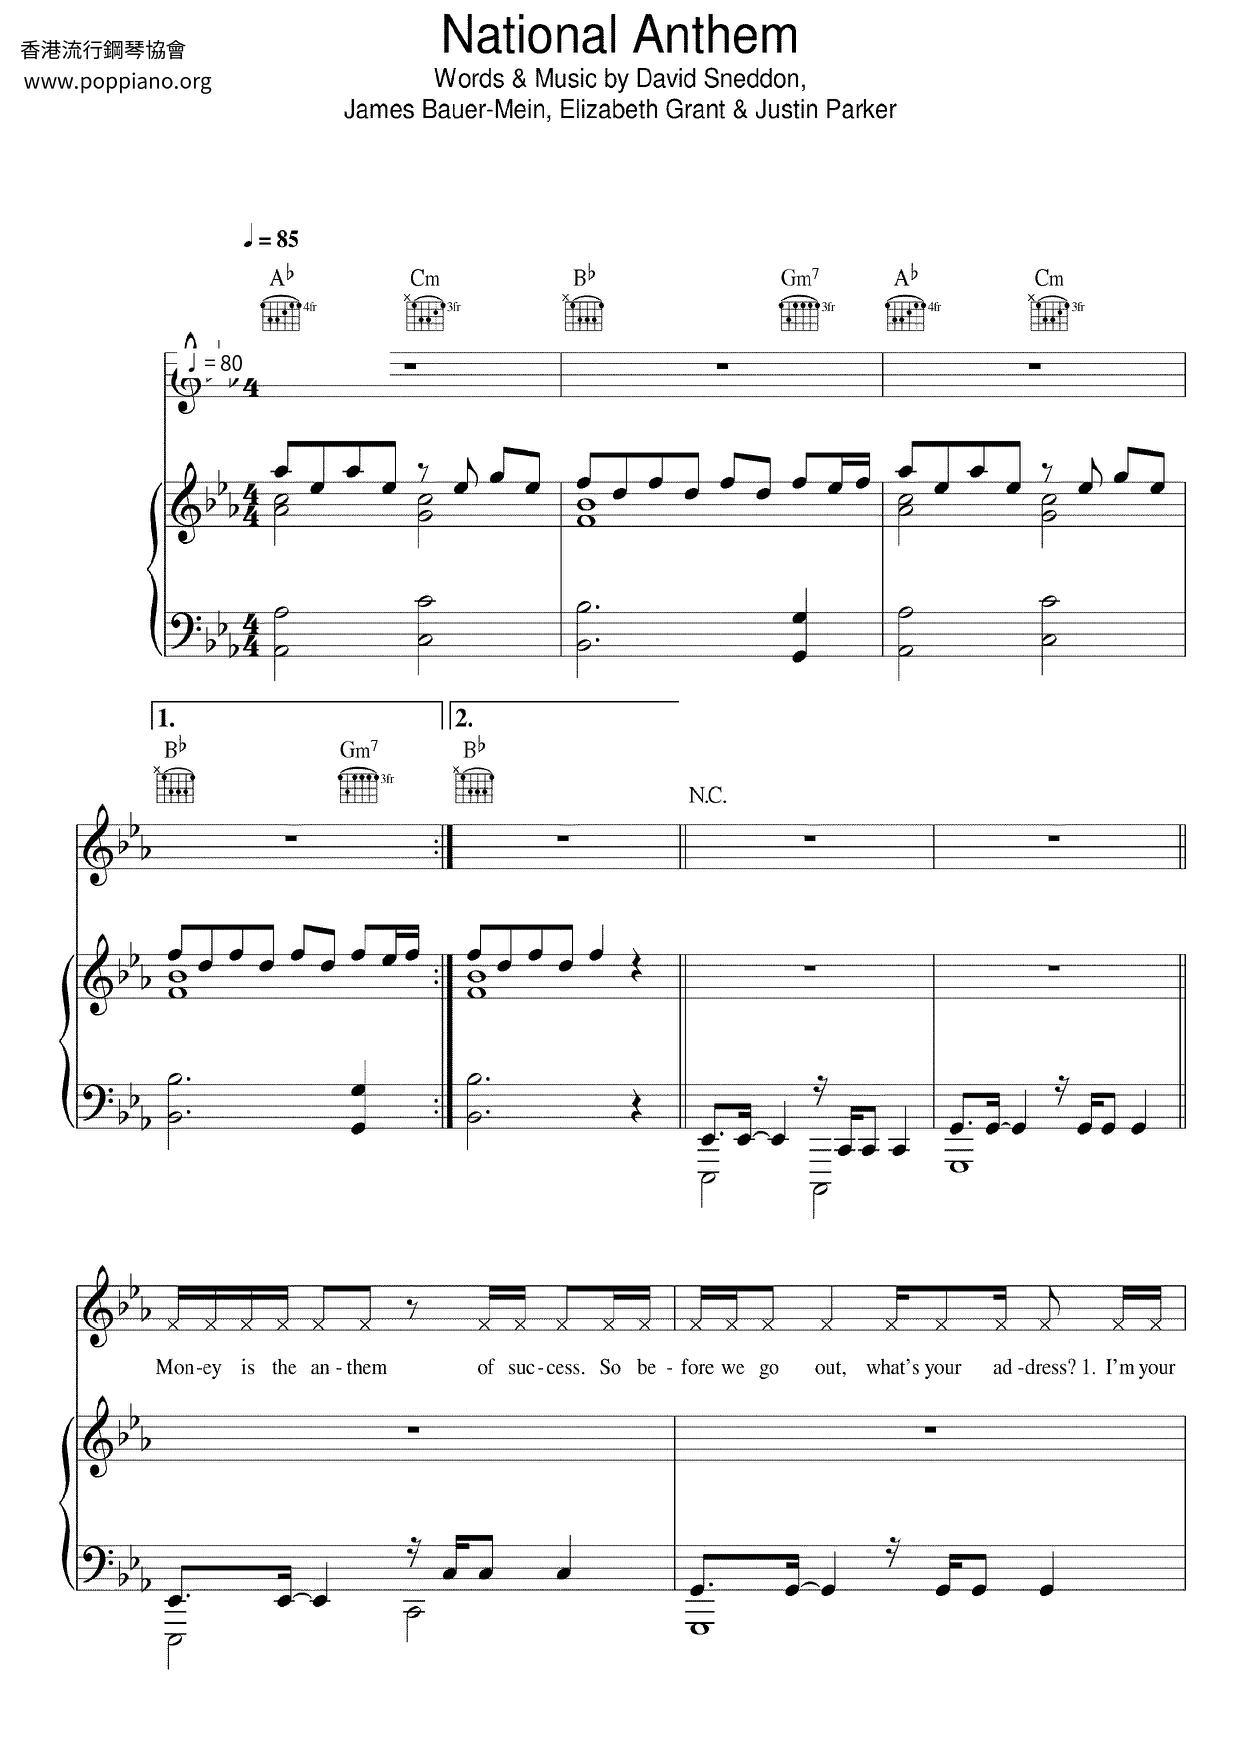 National Anthemピアノ譜